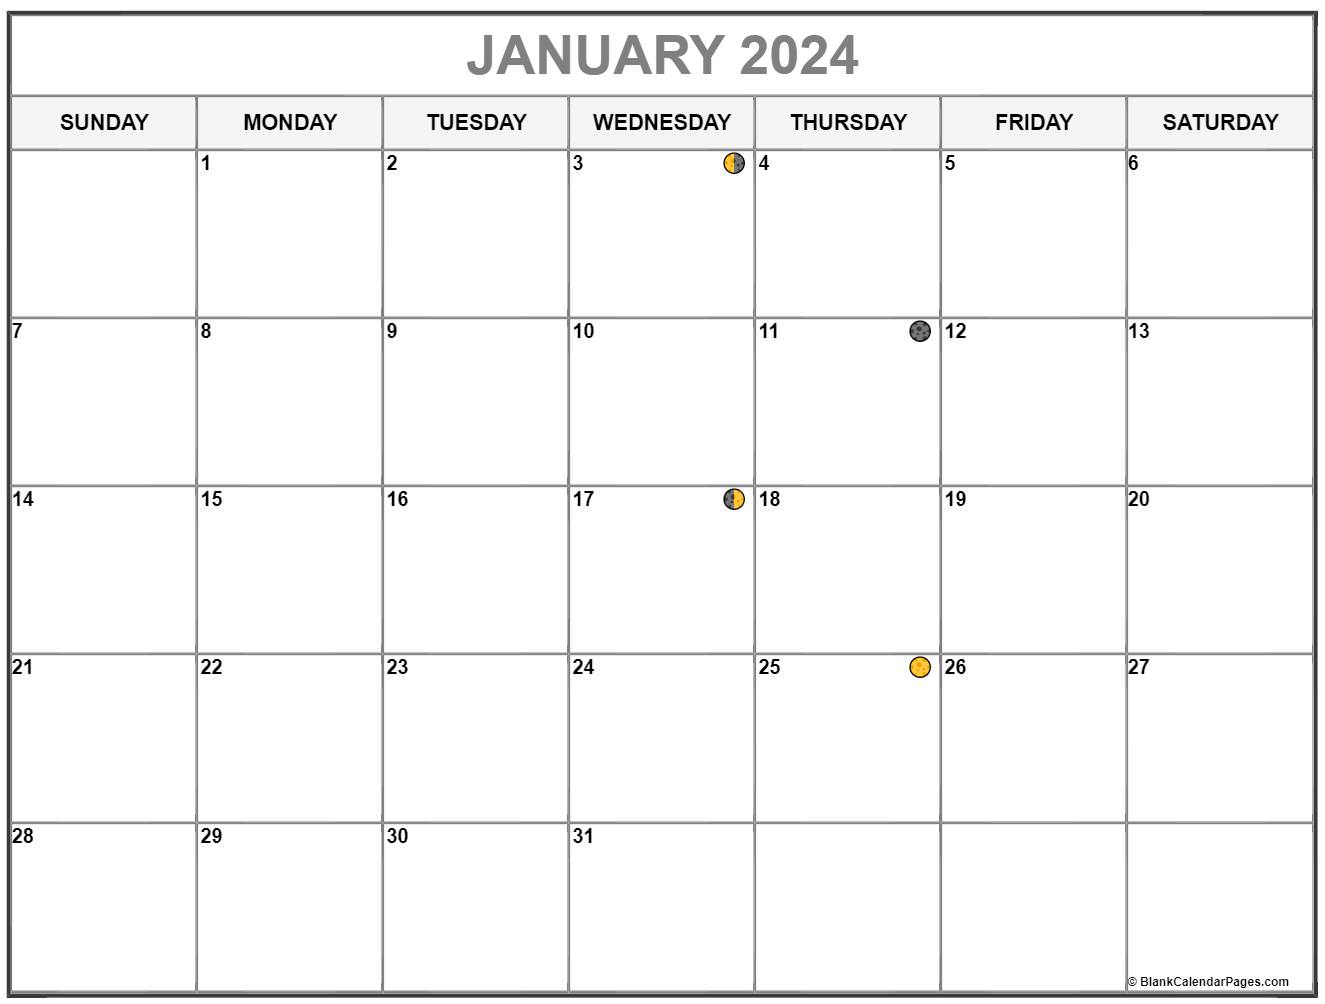 2023 January Calendars Handy Calendars Photos